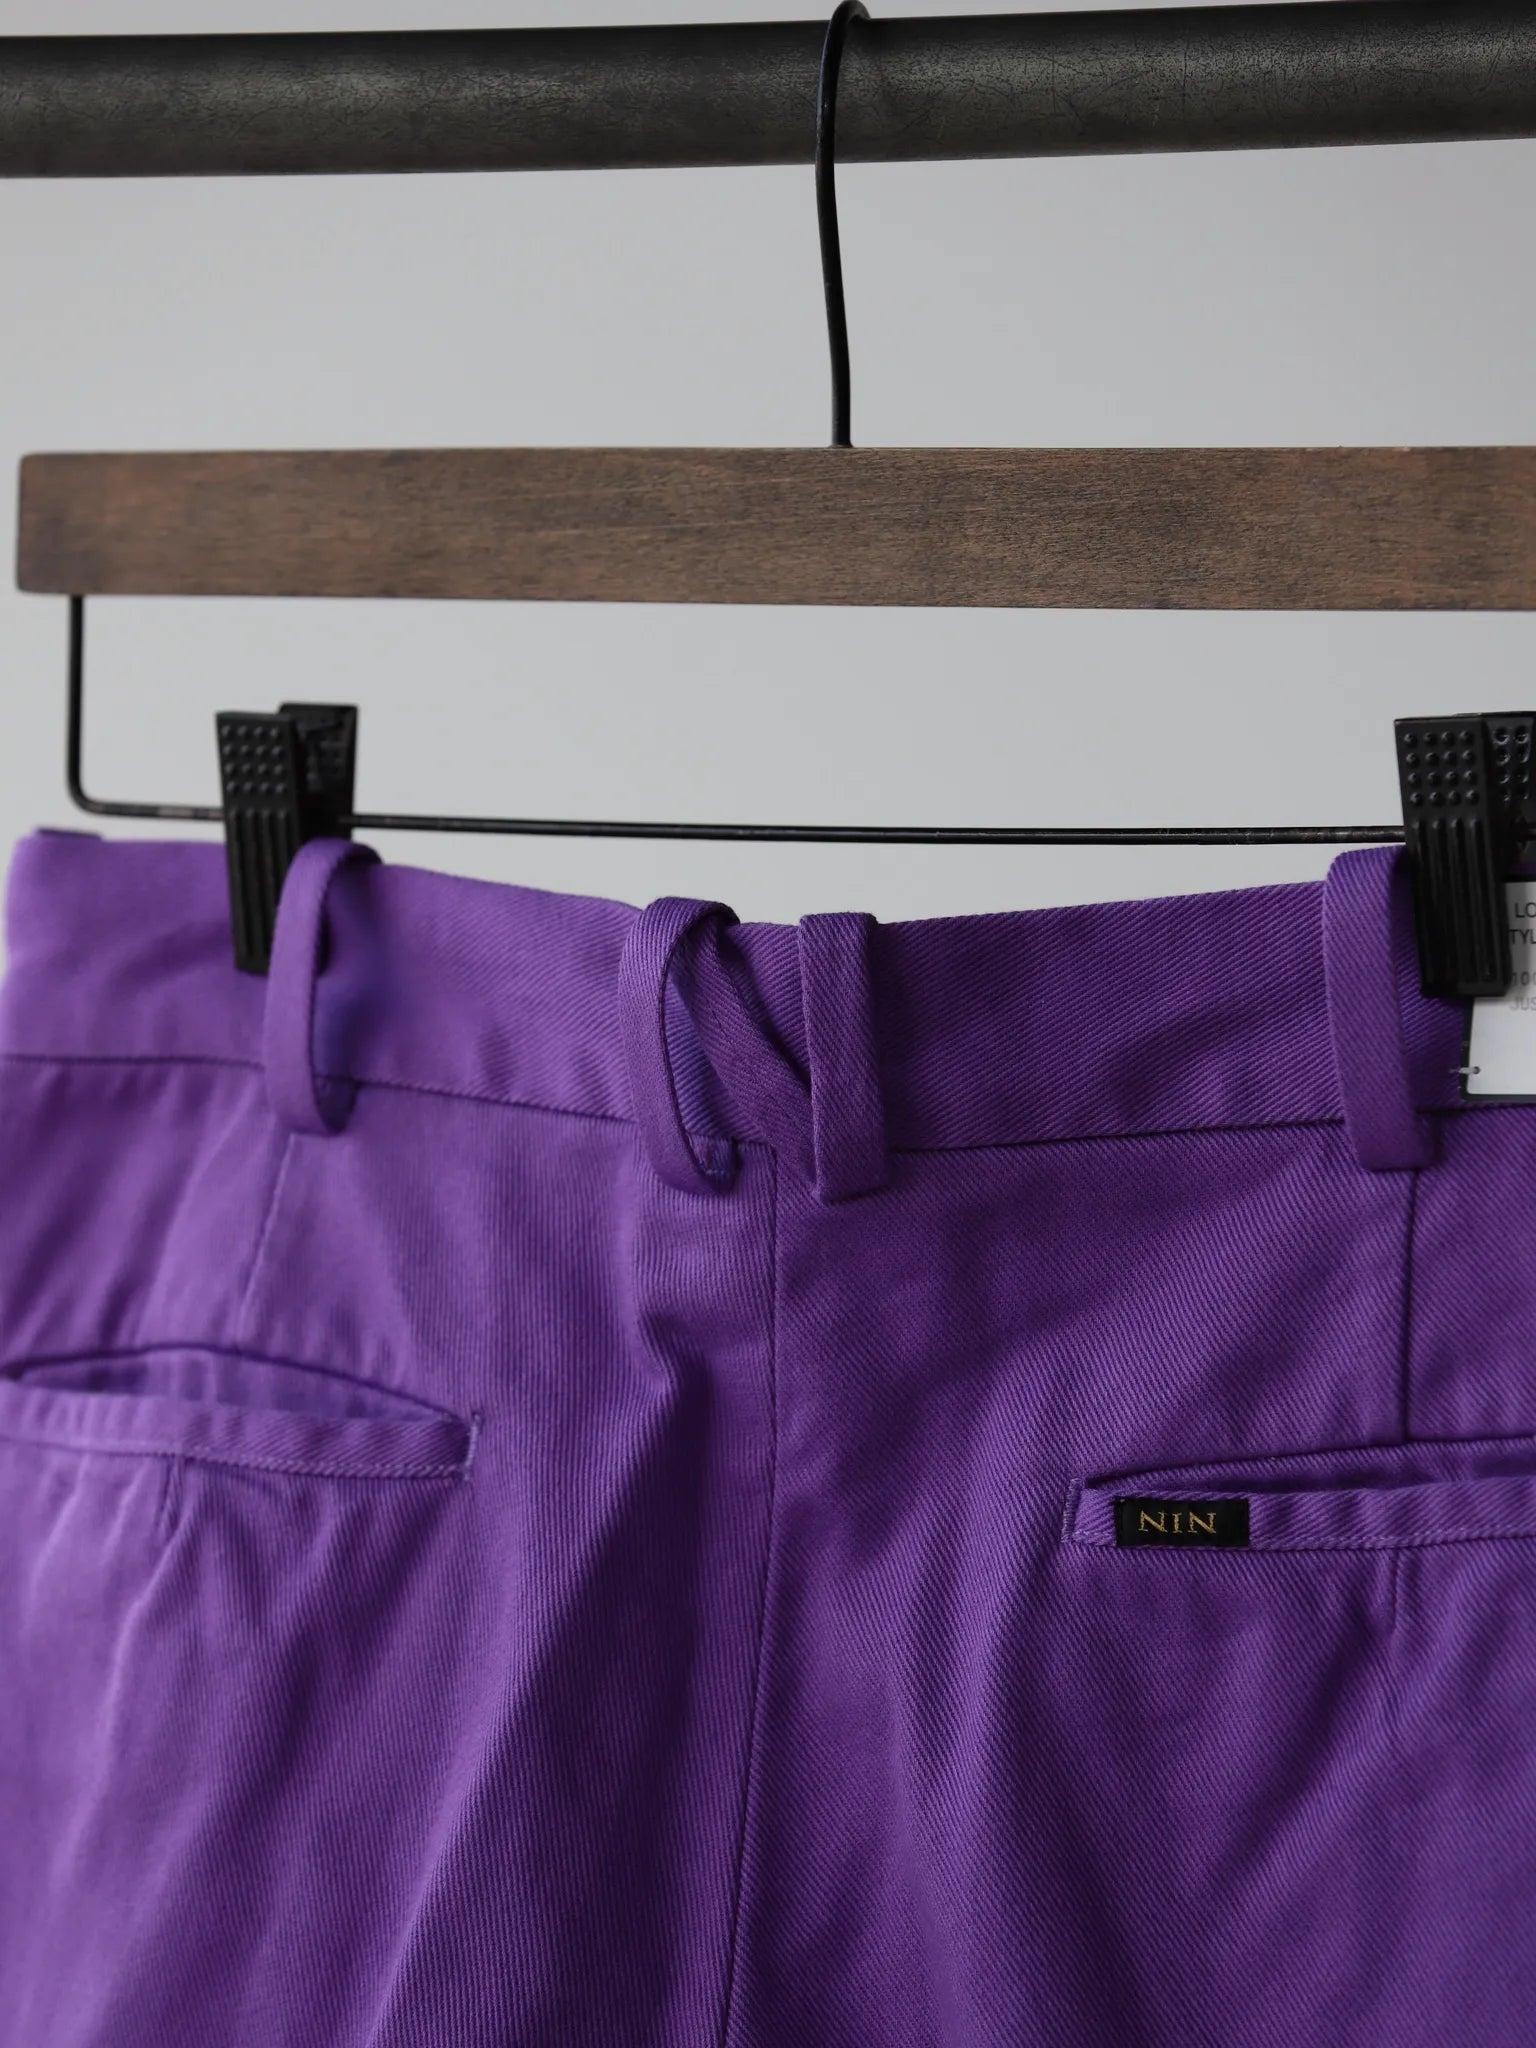 niceness-shorter-colored-slacks-purple-8